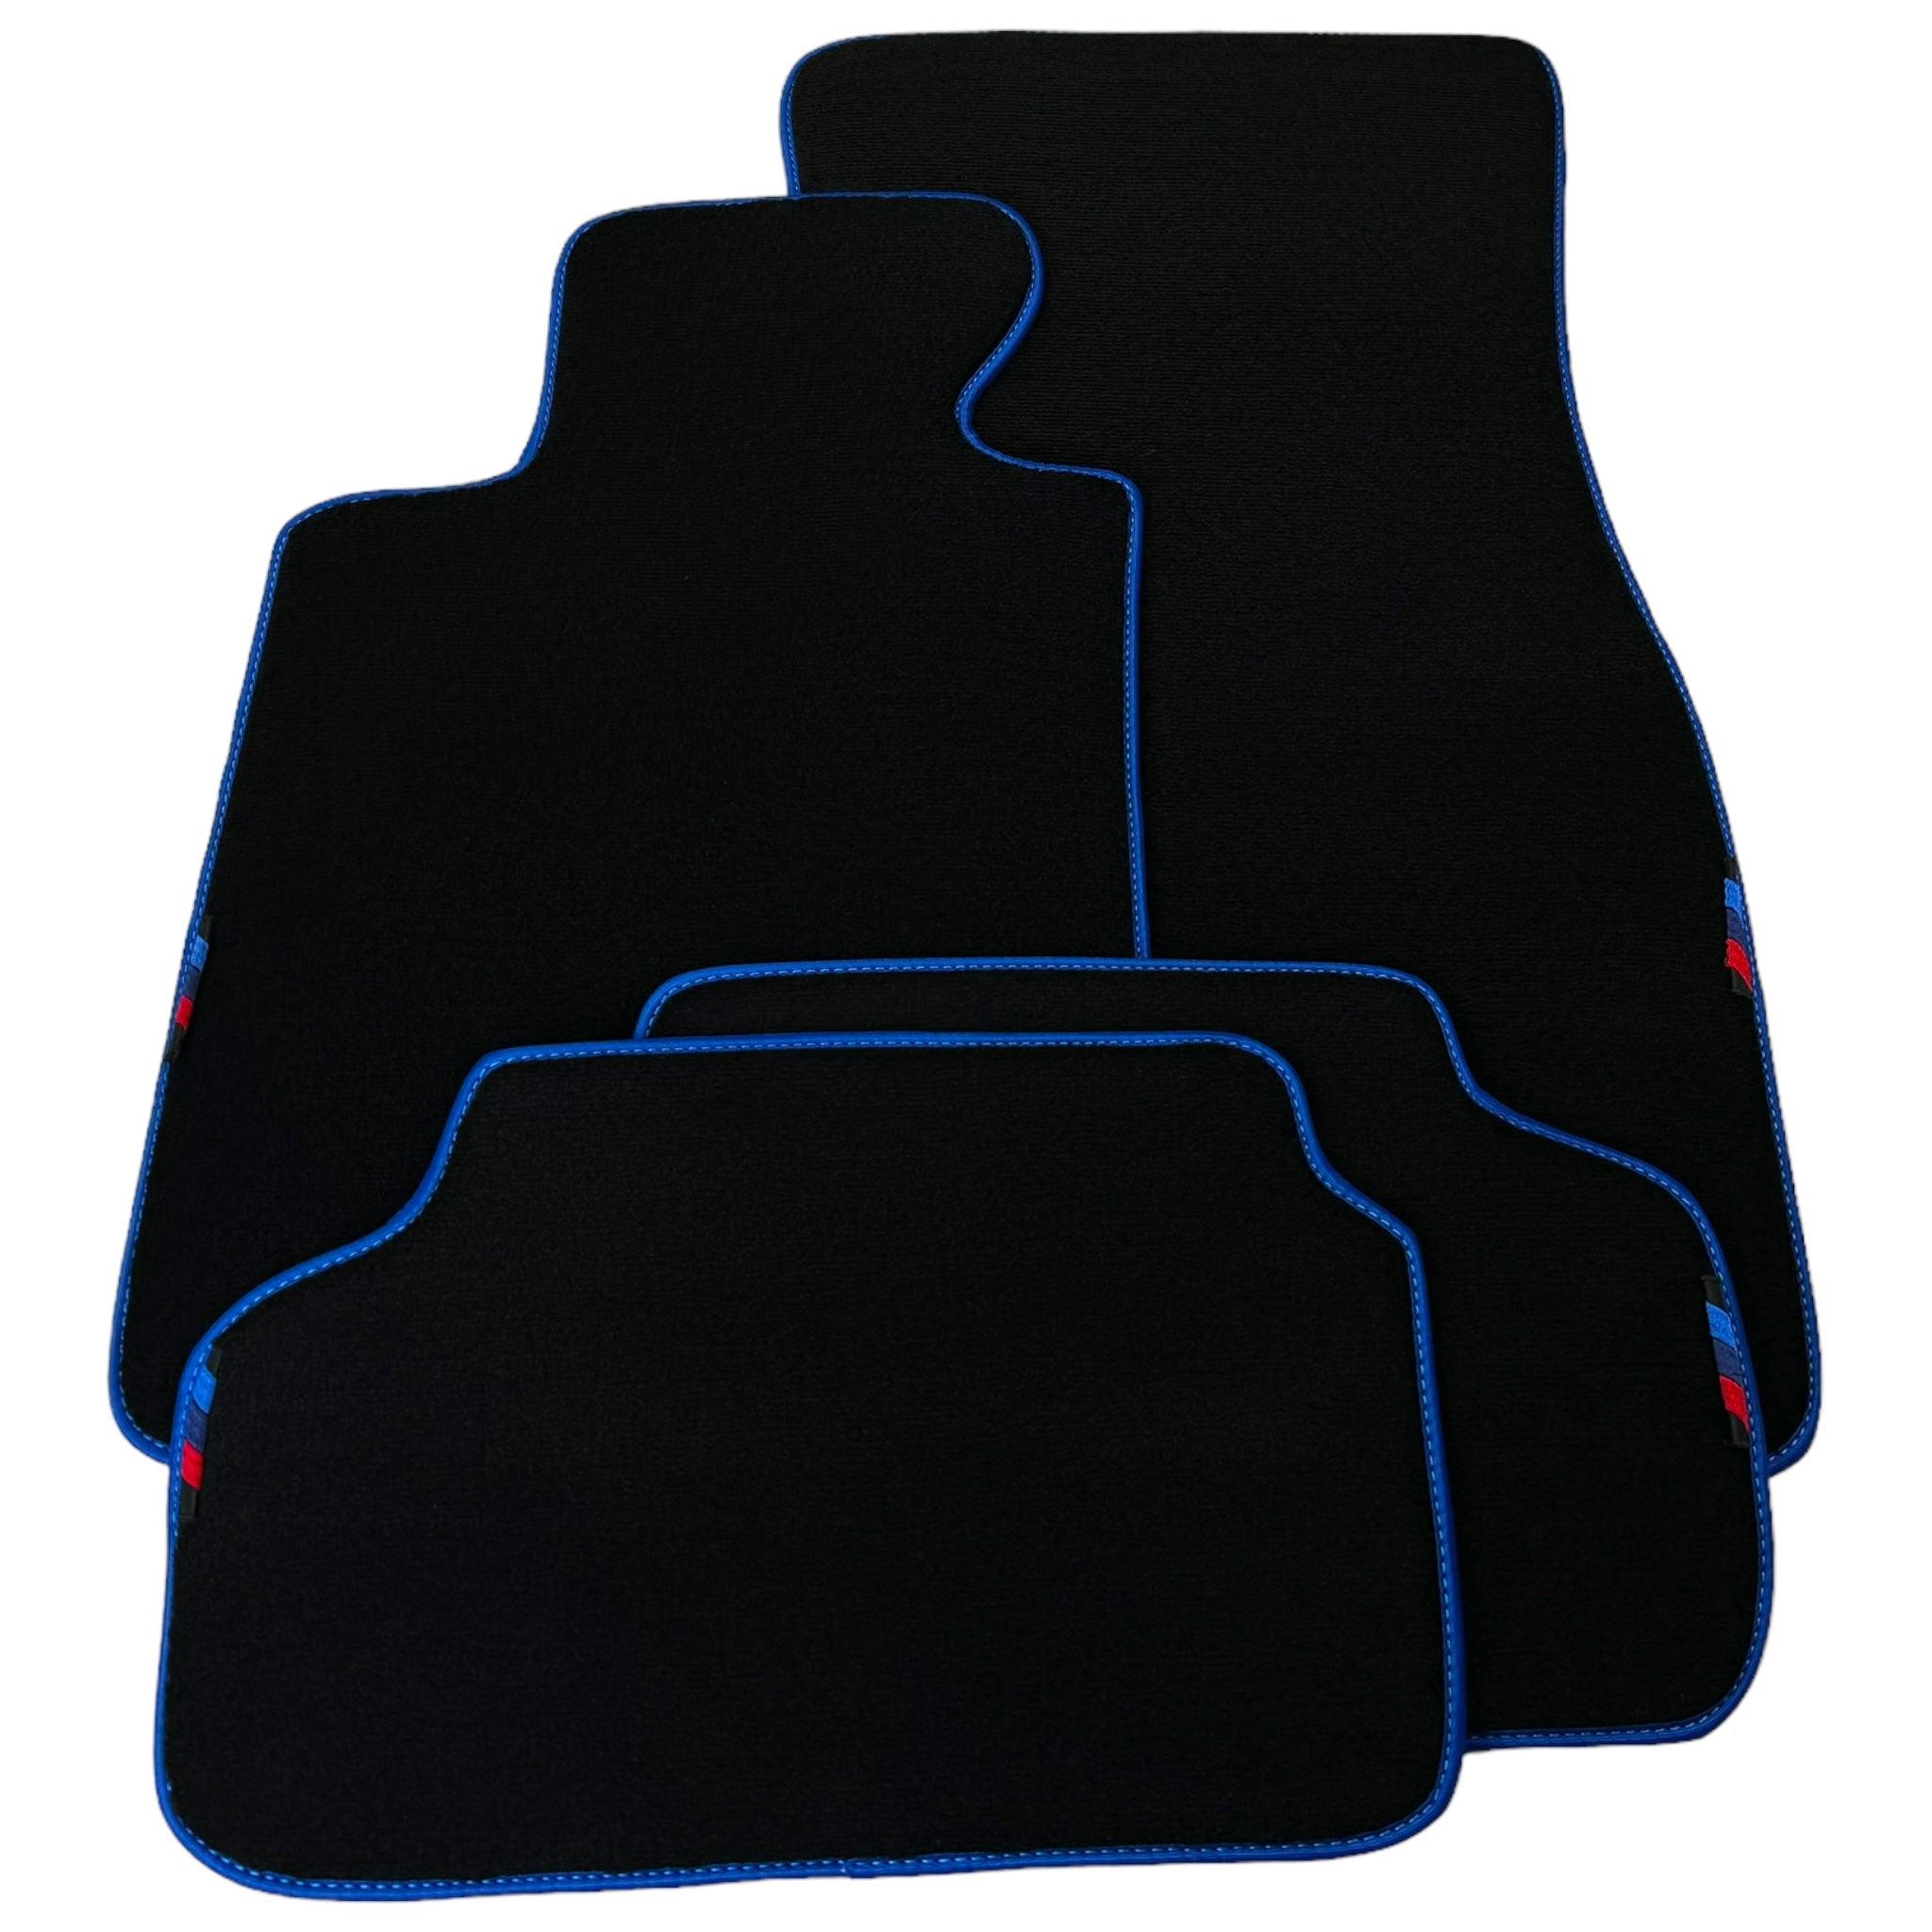 Black Floor Mats For BMW 5 Series G31 Wagon | Blue Trim